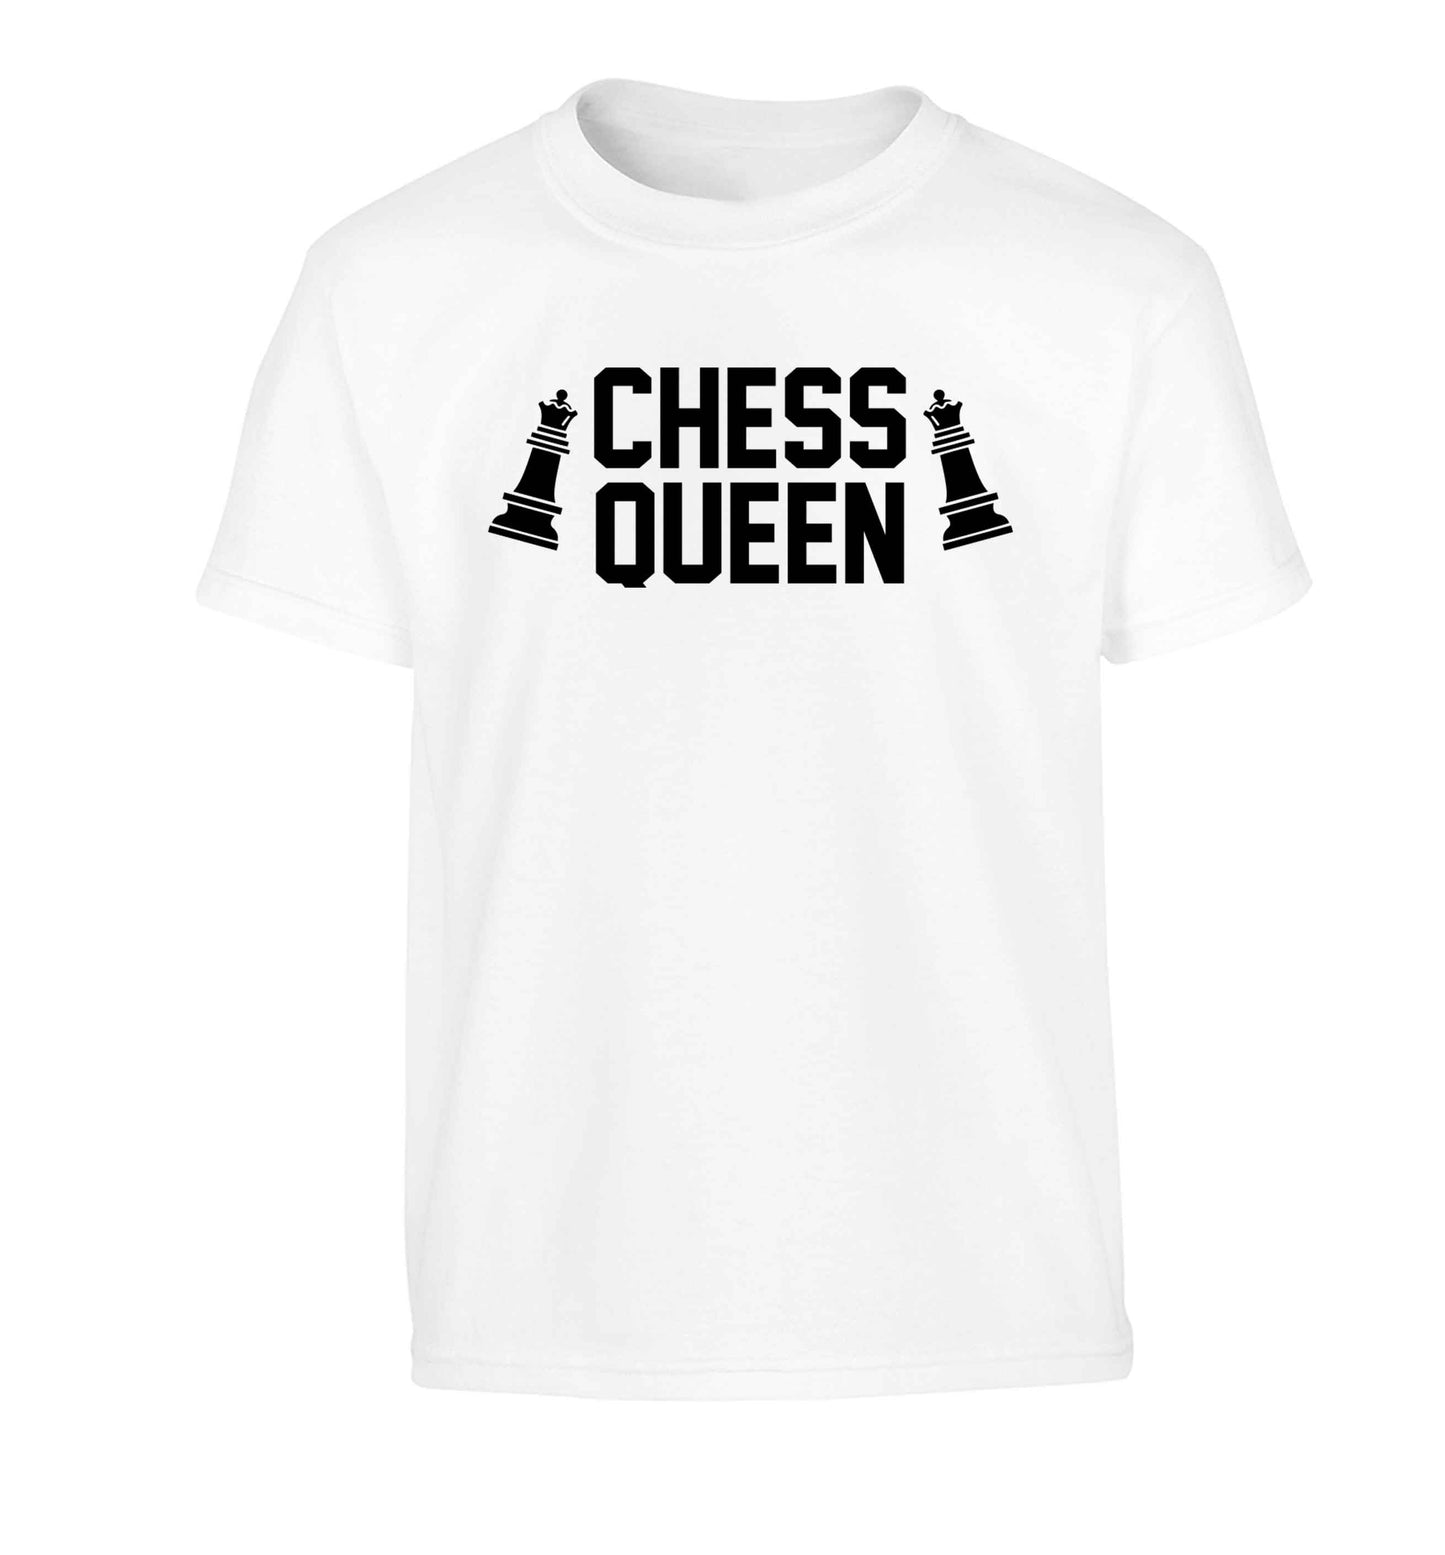 Chess queen Children's white Tshirt 12-13 Years